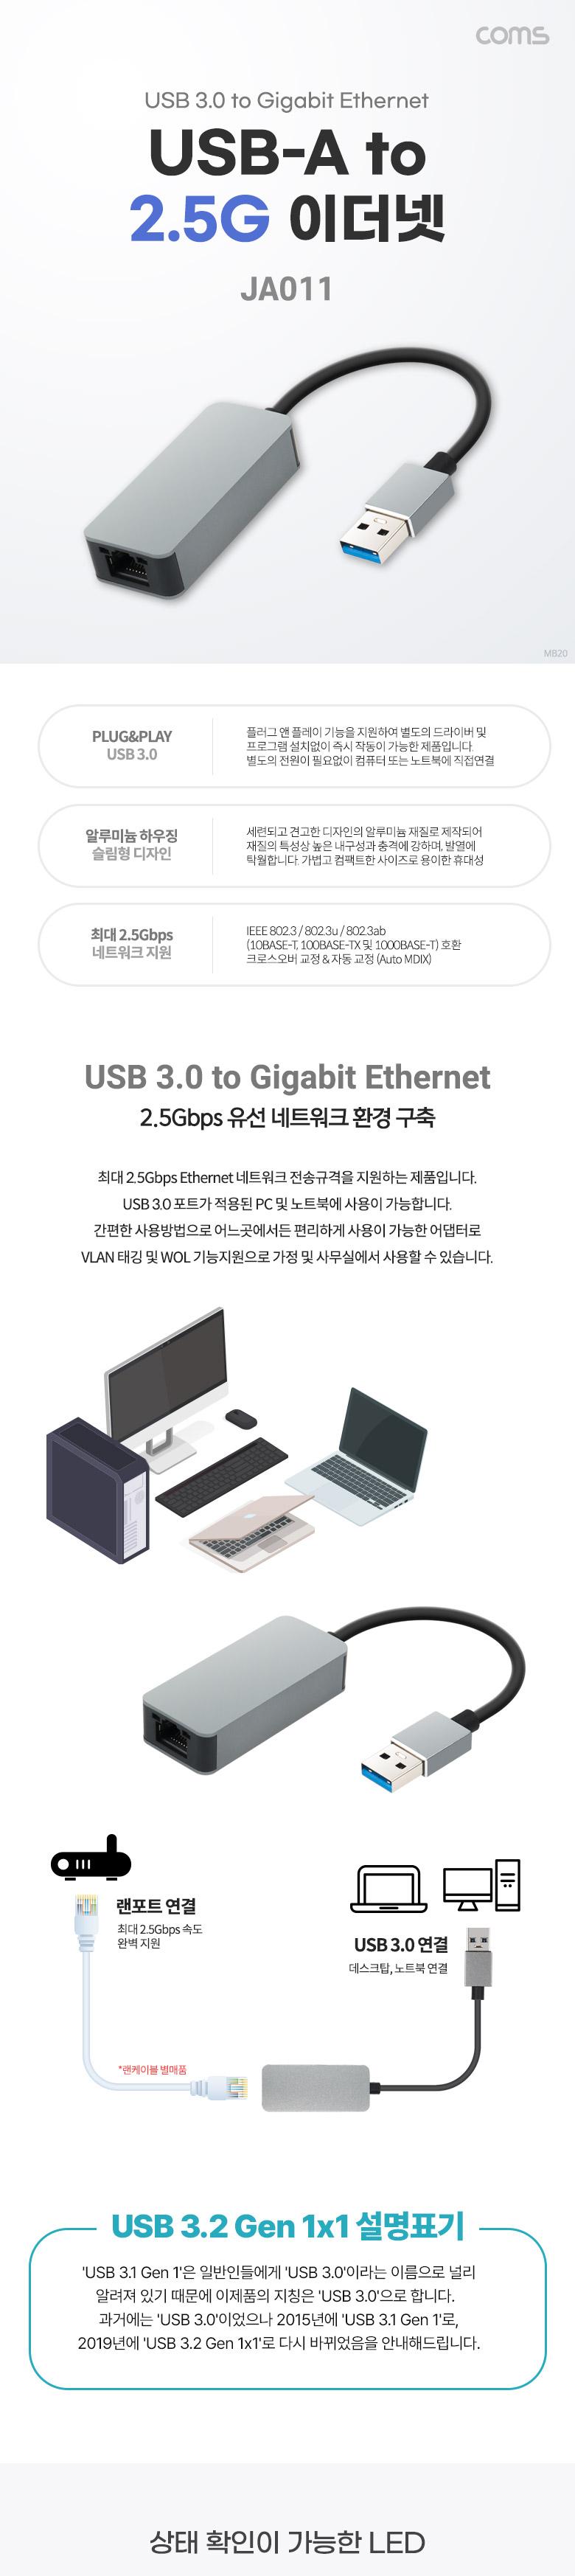 Coms USB 3.0 to ⰡƮ ̴. . . 2.5Gbps. Gigabit Ethernet  RJ45 Ʈũ Ⱑ  LAN ̴ Ⱑ̴ ⰡƮ̴ Ⱑ ̴ݾ Ⱑ̴ ͳ ͳݾ USB30TOⰡƮ̴ USB30TO̴